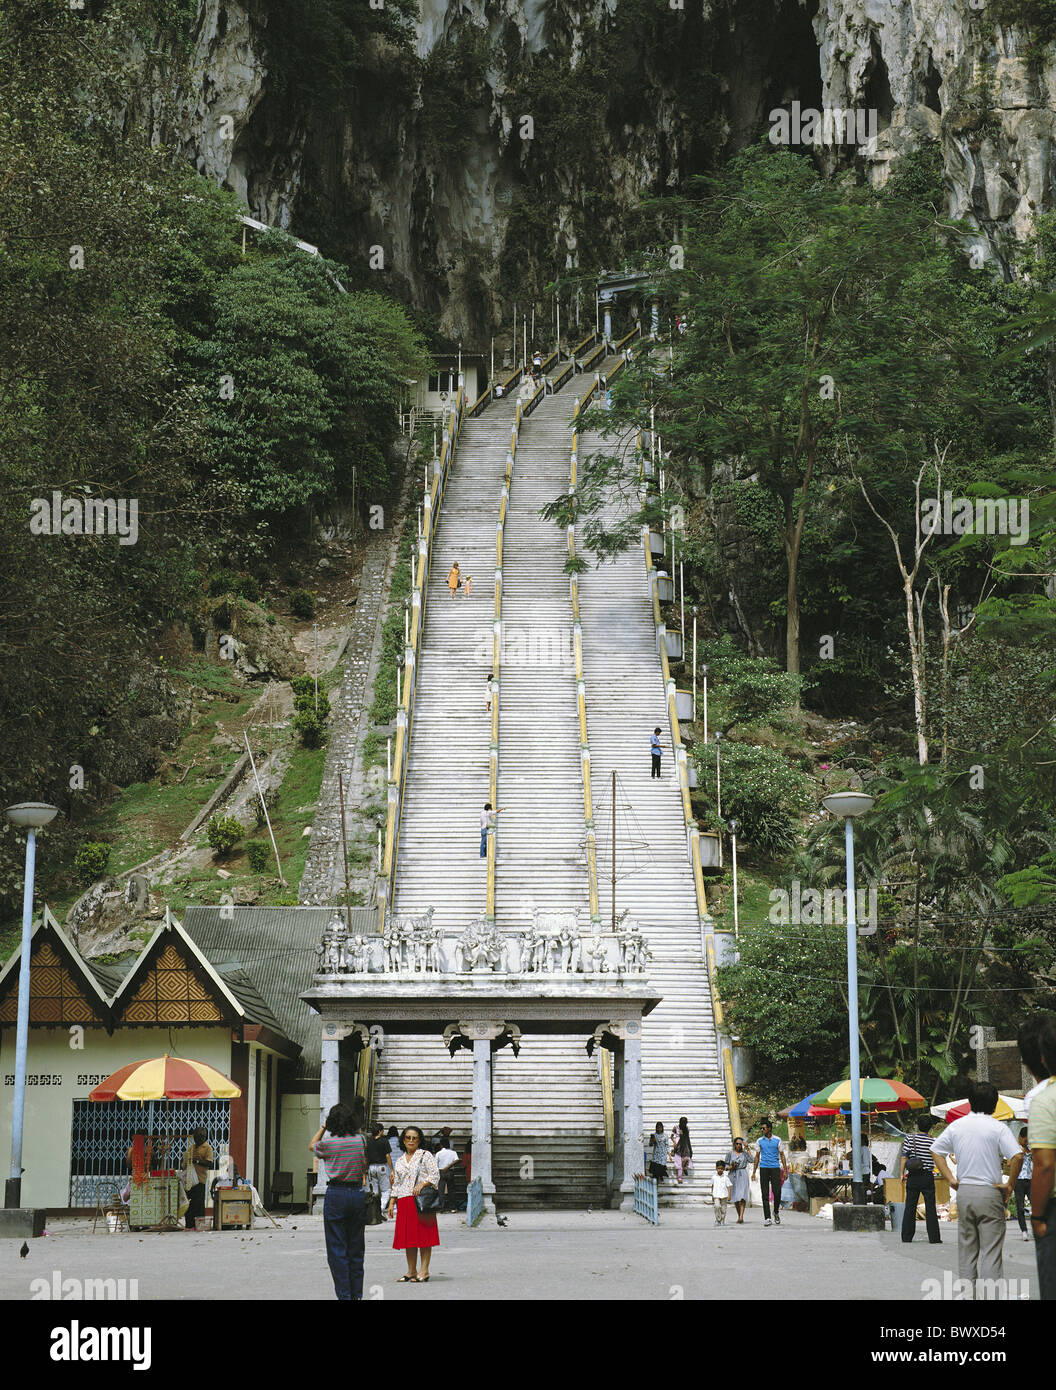 250 Stufen Batu Höhlen Grotten Sanctum Kultur Malaysia Asien Treppe Stockfoto